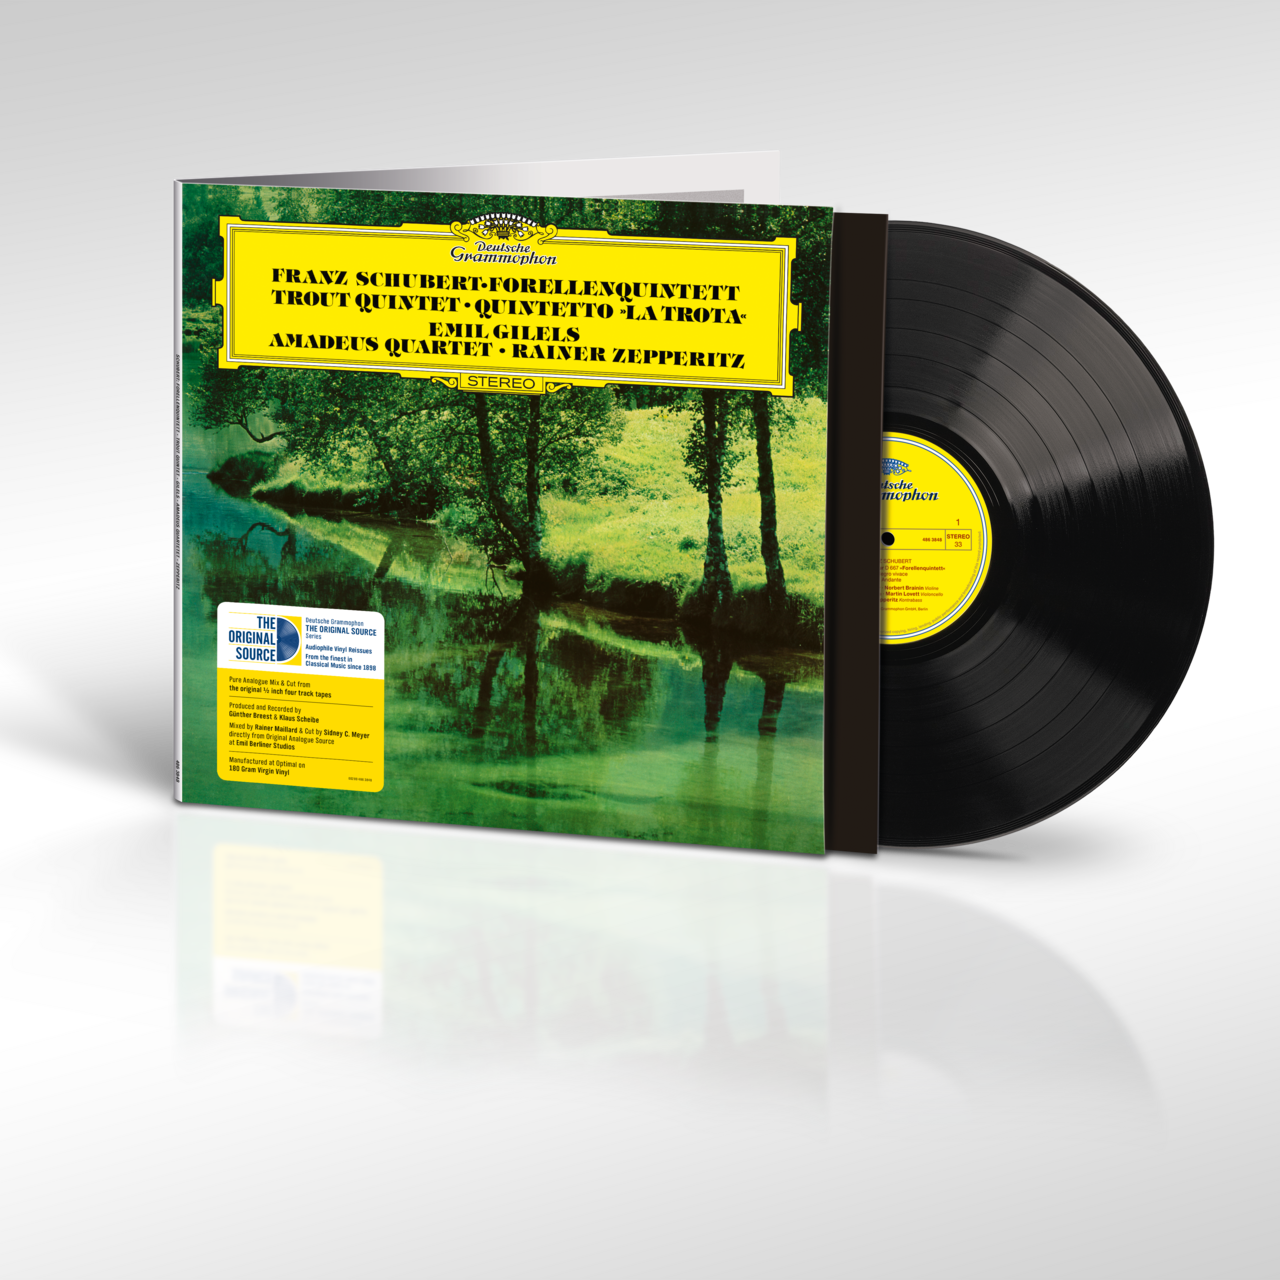 Emil Gilels, Members of the Amadeus Quartet, Rainer Zepperitz - The Original Source - Schubert - Piano Quintet in A Major, D. 667 "Trout": Vinyl LP